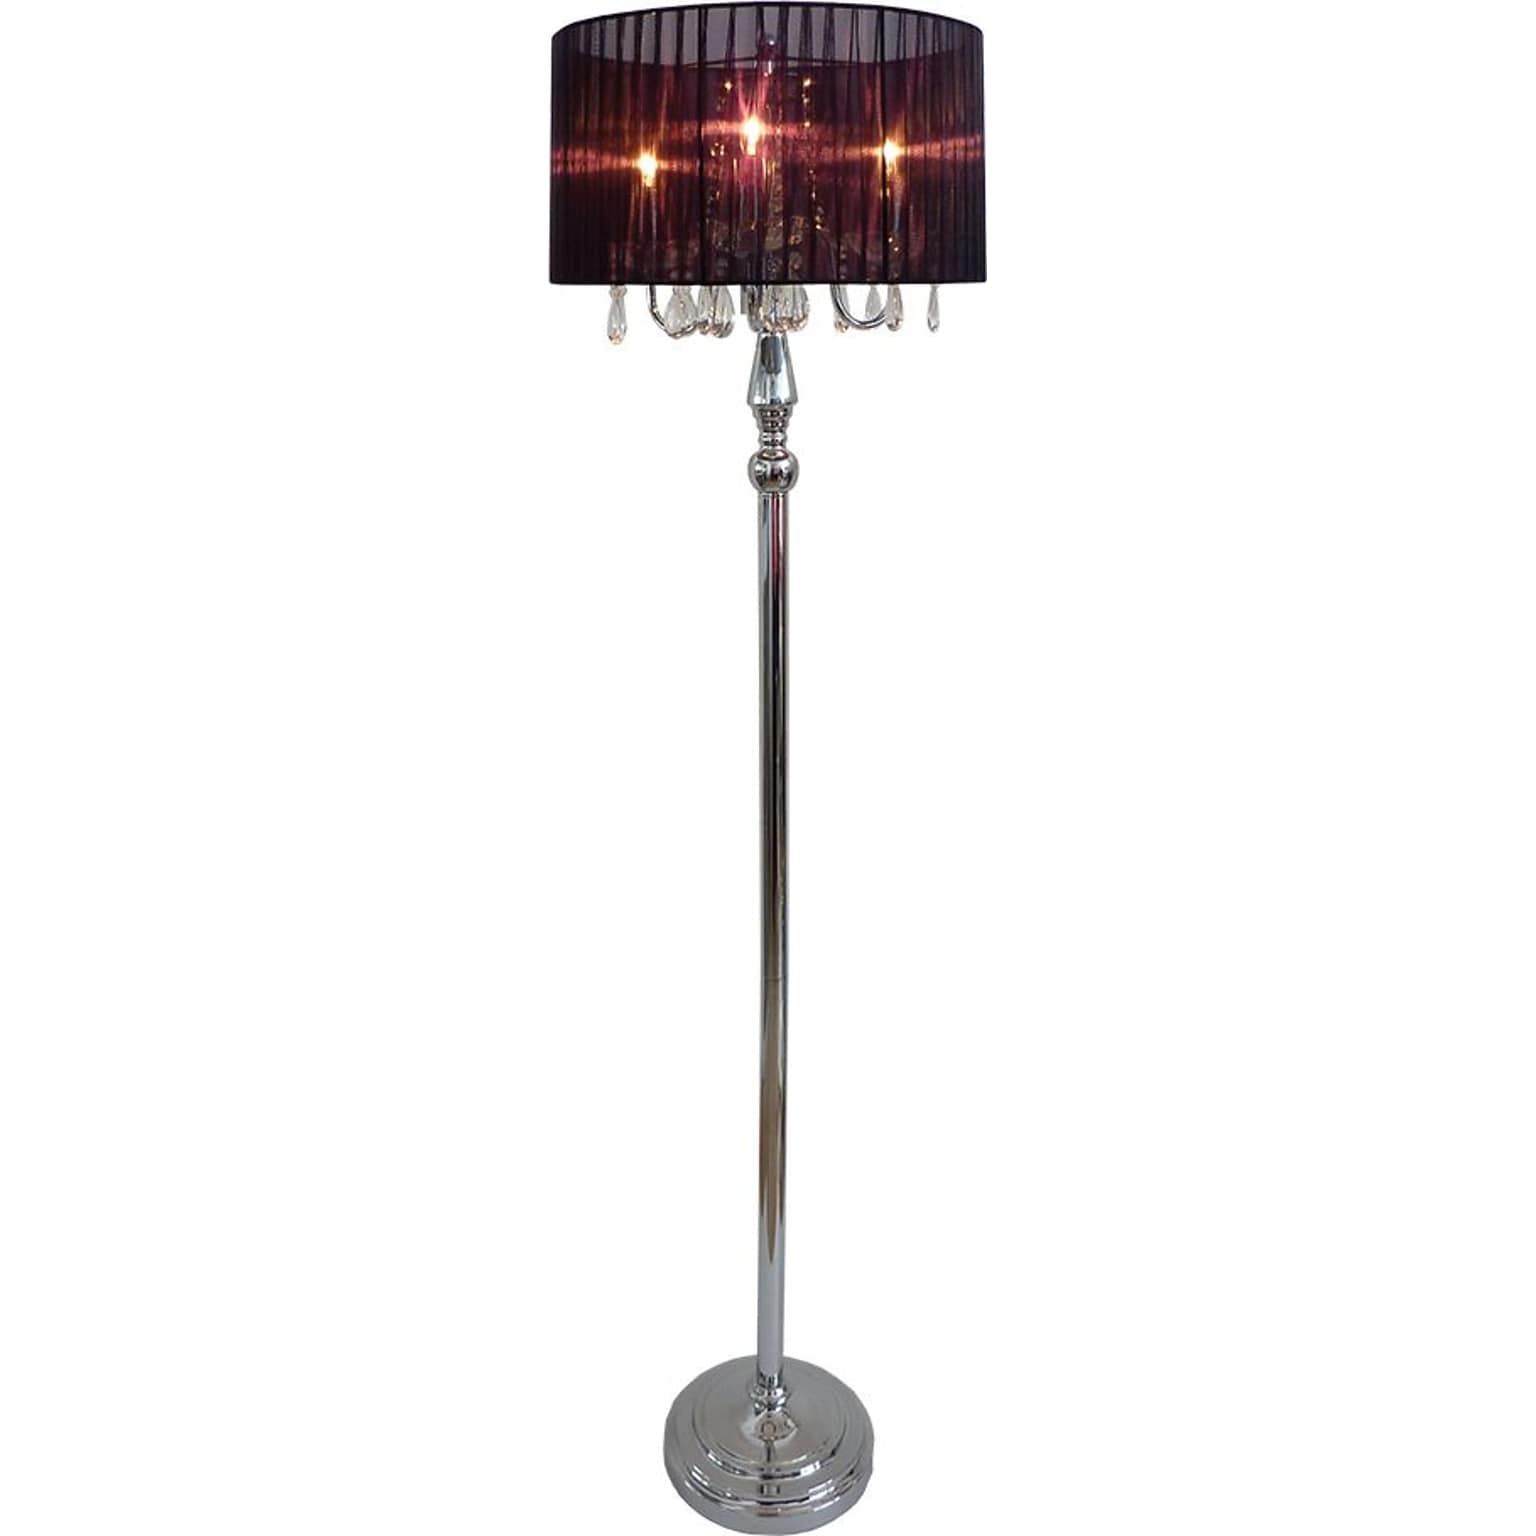 Elegant Designs Sheer Black Shade Floor Incandescent Lamp With Hanging Crystals, Chrome Finish